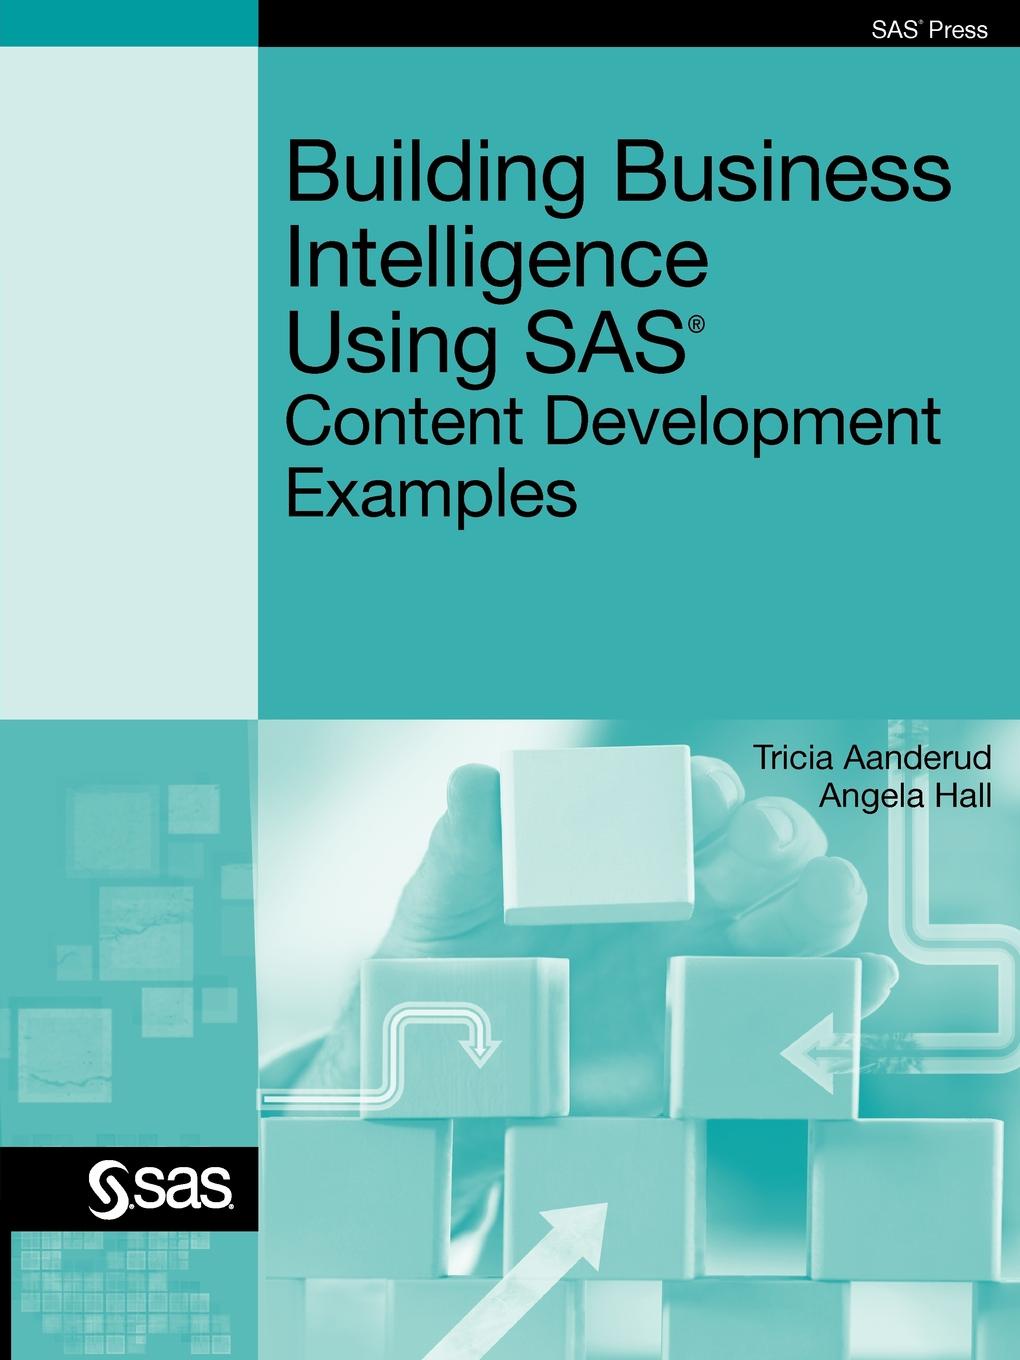 Building Business Intelligence Using SAS. Content Development Examples